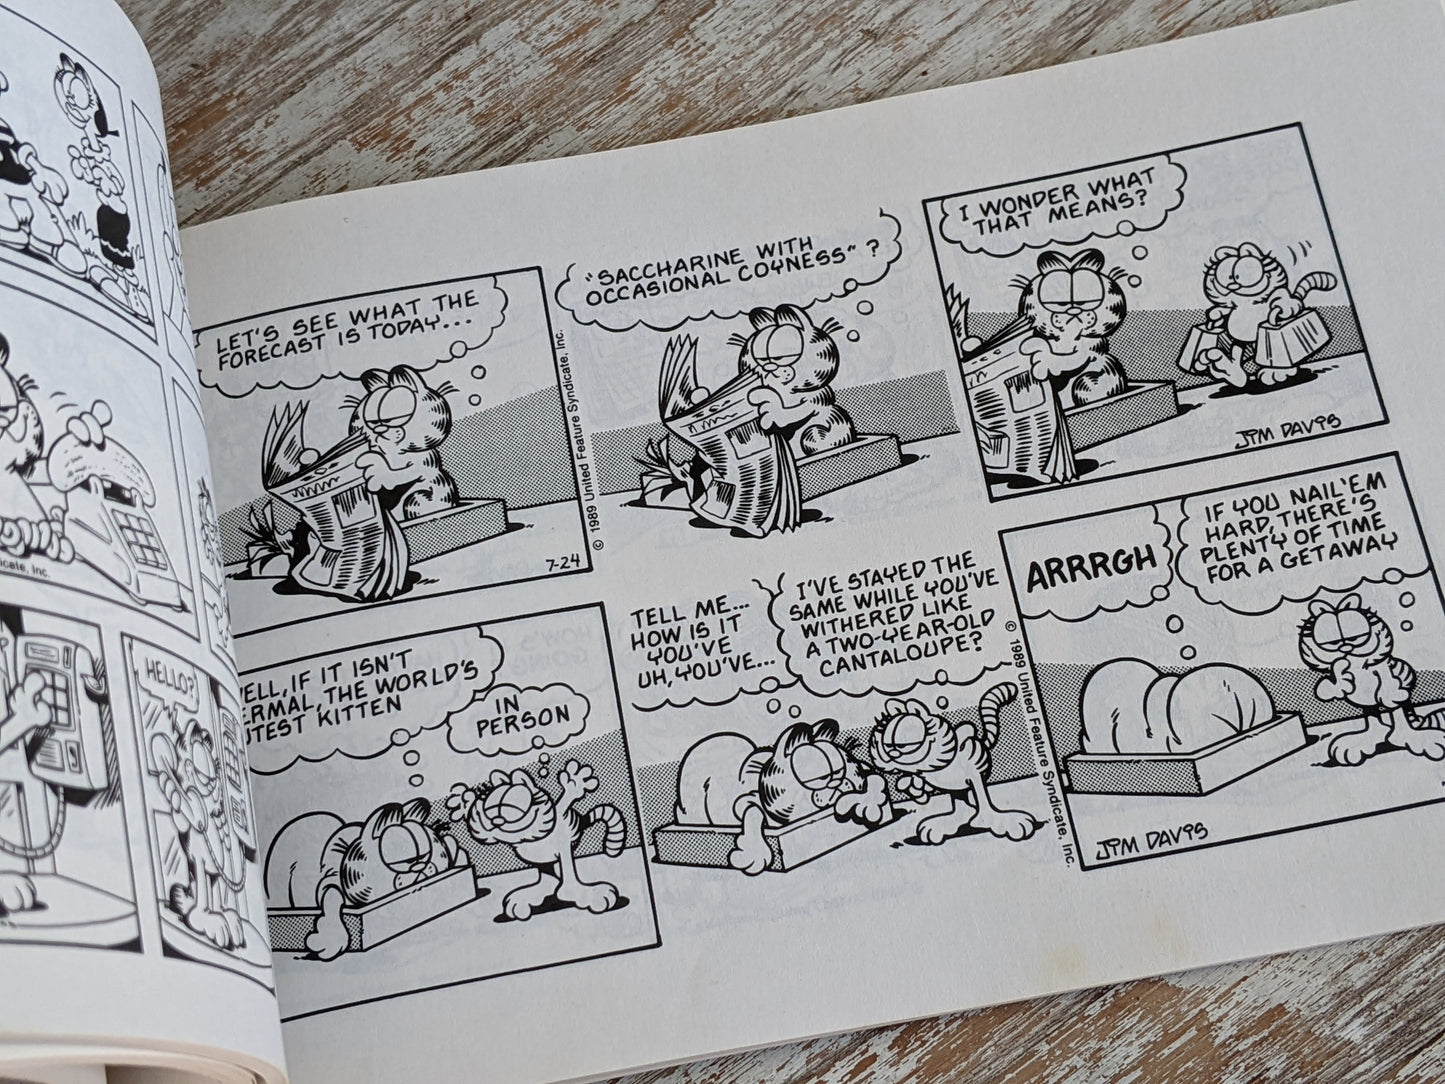 1990 Garfield Hangs Out Comic Book #19 By Jim Davis **Awesome Memories !!